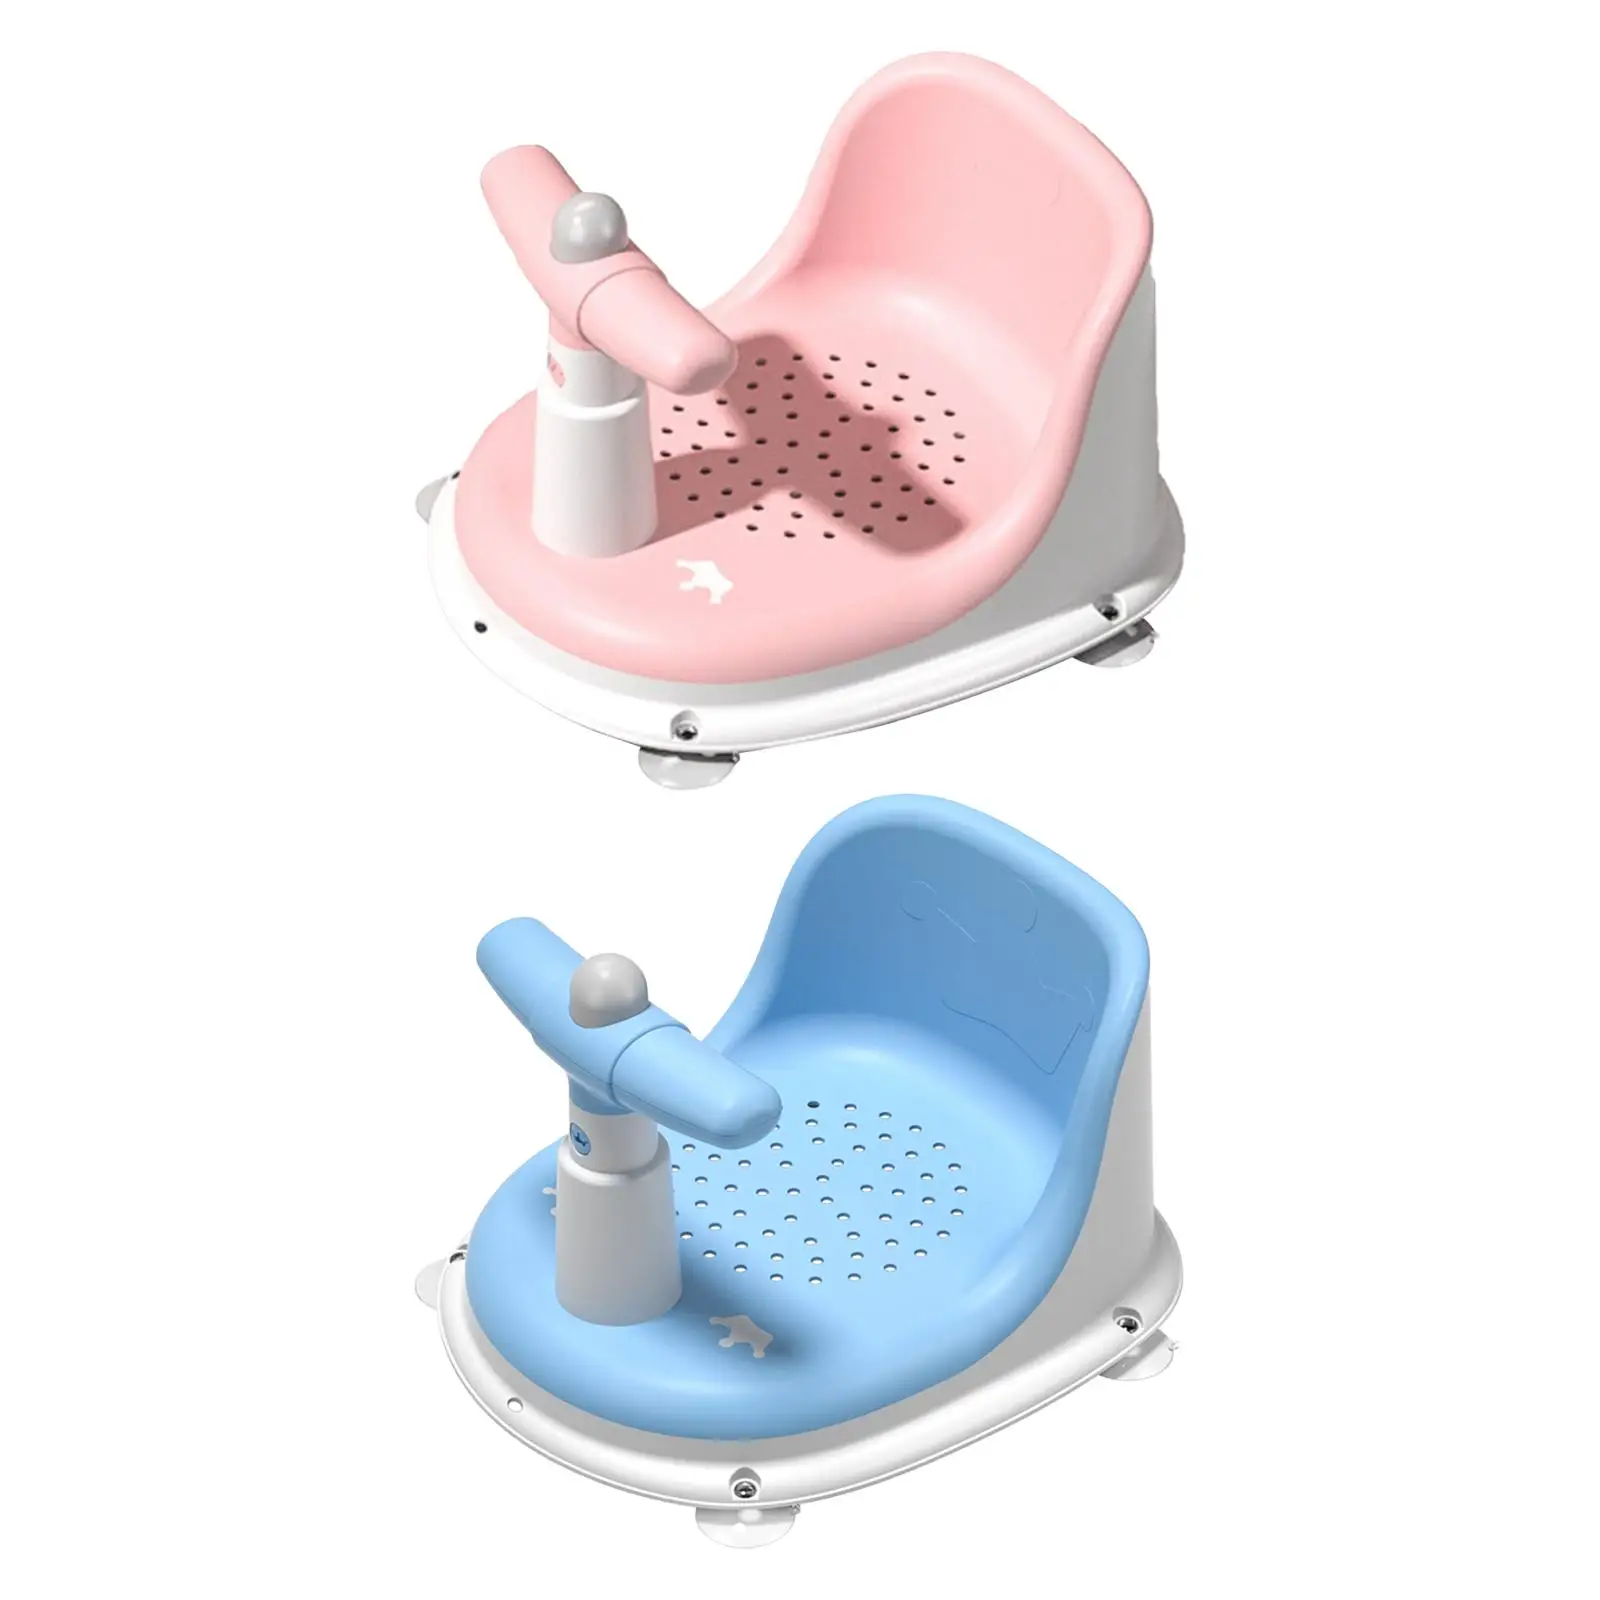 Baby Bathtub Seat Environmentally Friendly Fashionable Hanging Foldable Stable Baby Bath Seat for Living Room Home Bathroom